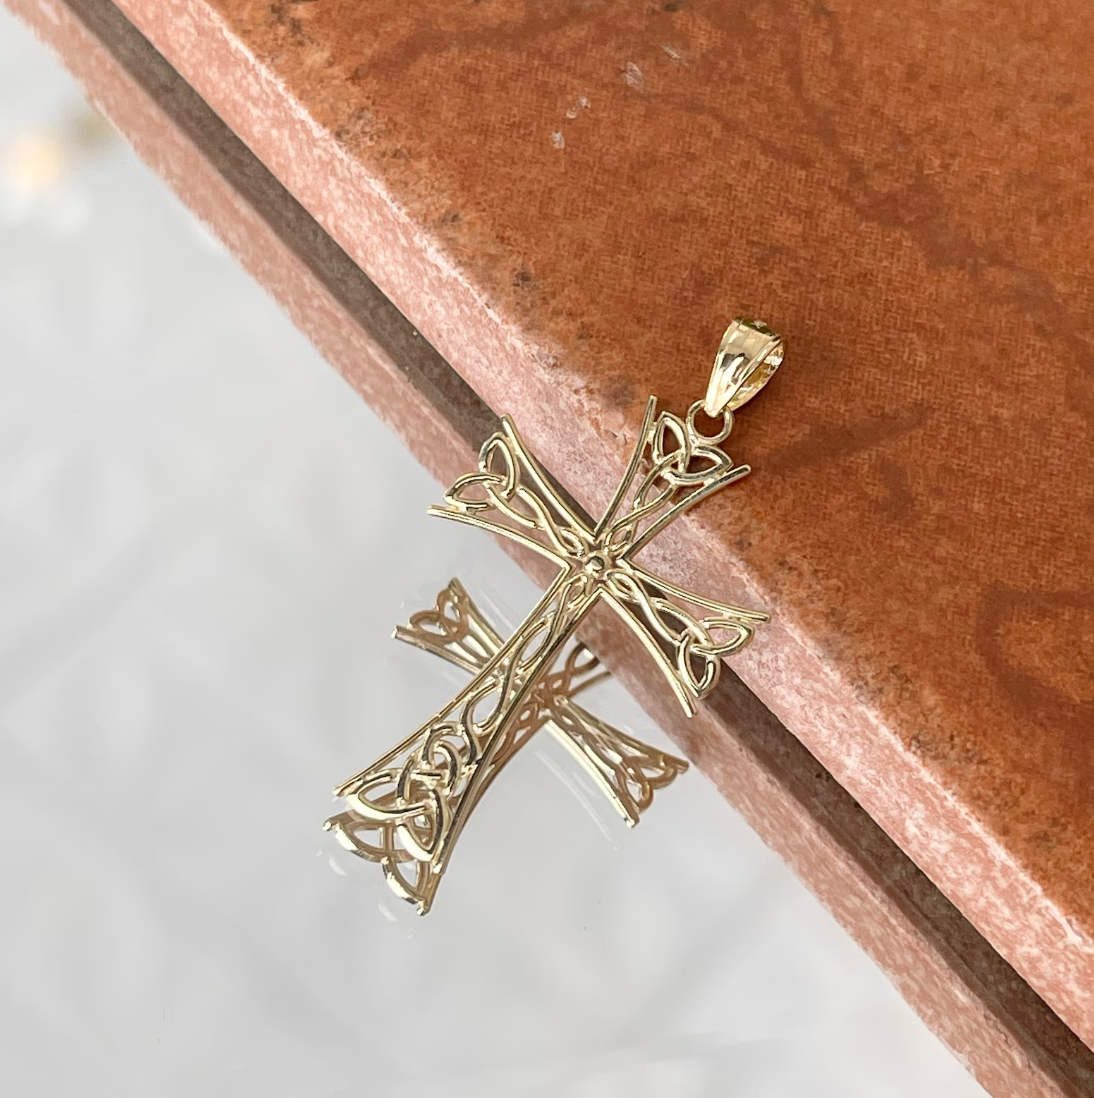 14KT Yellow Gold Celtic Knot Weave Cross Pendant